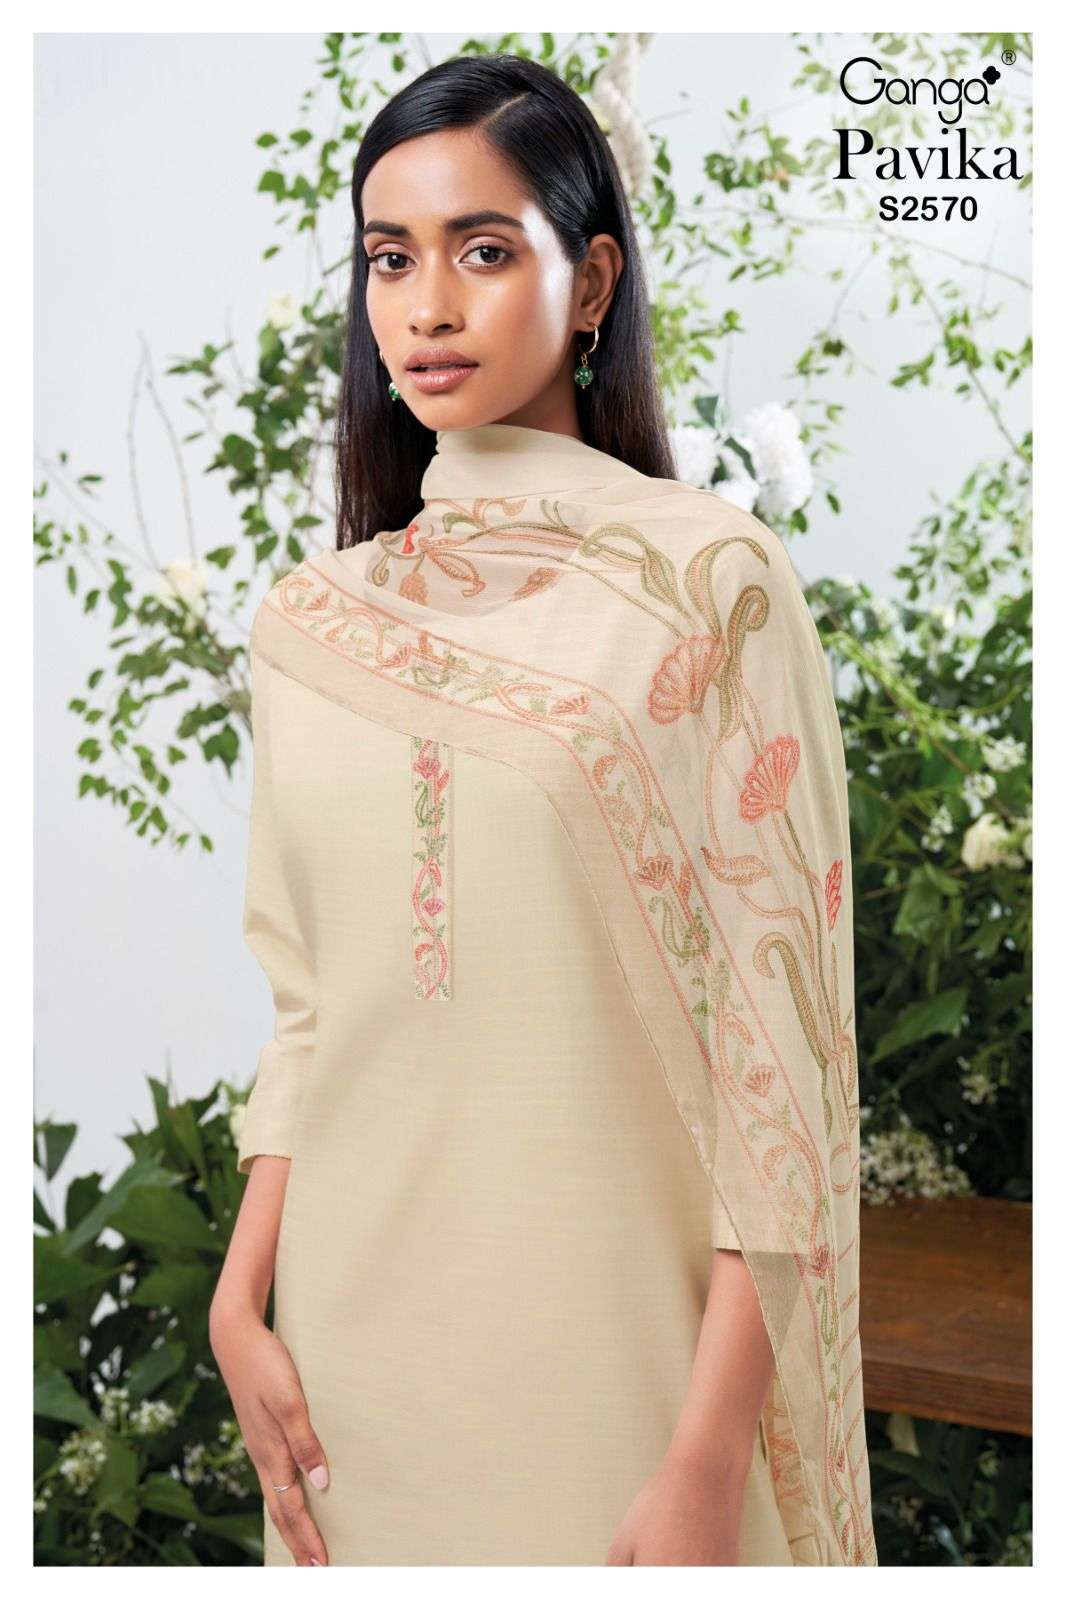 Ganga Pavika 2570 Fancy Silk Cotton Salwar Kameez Catalog Dealers